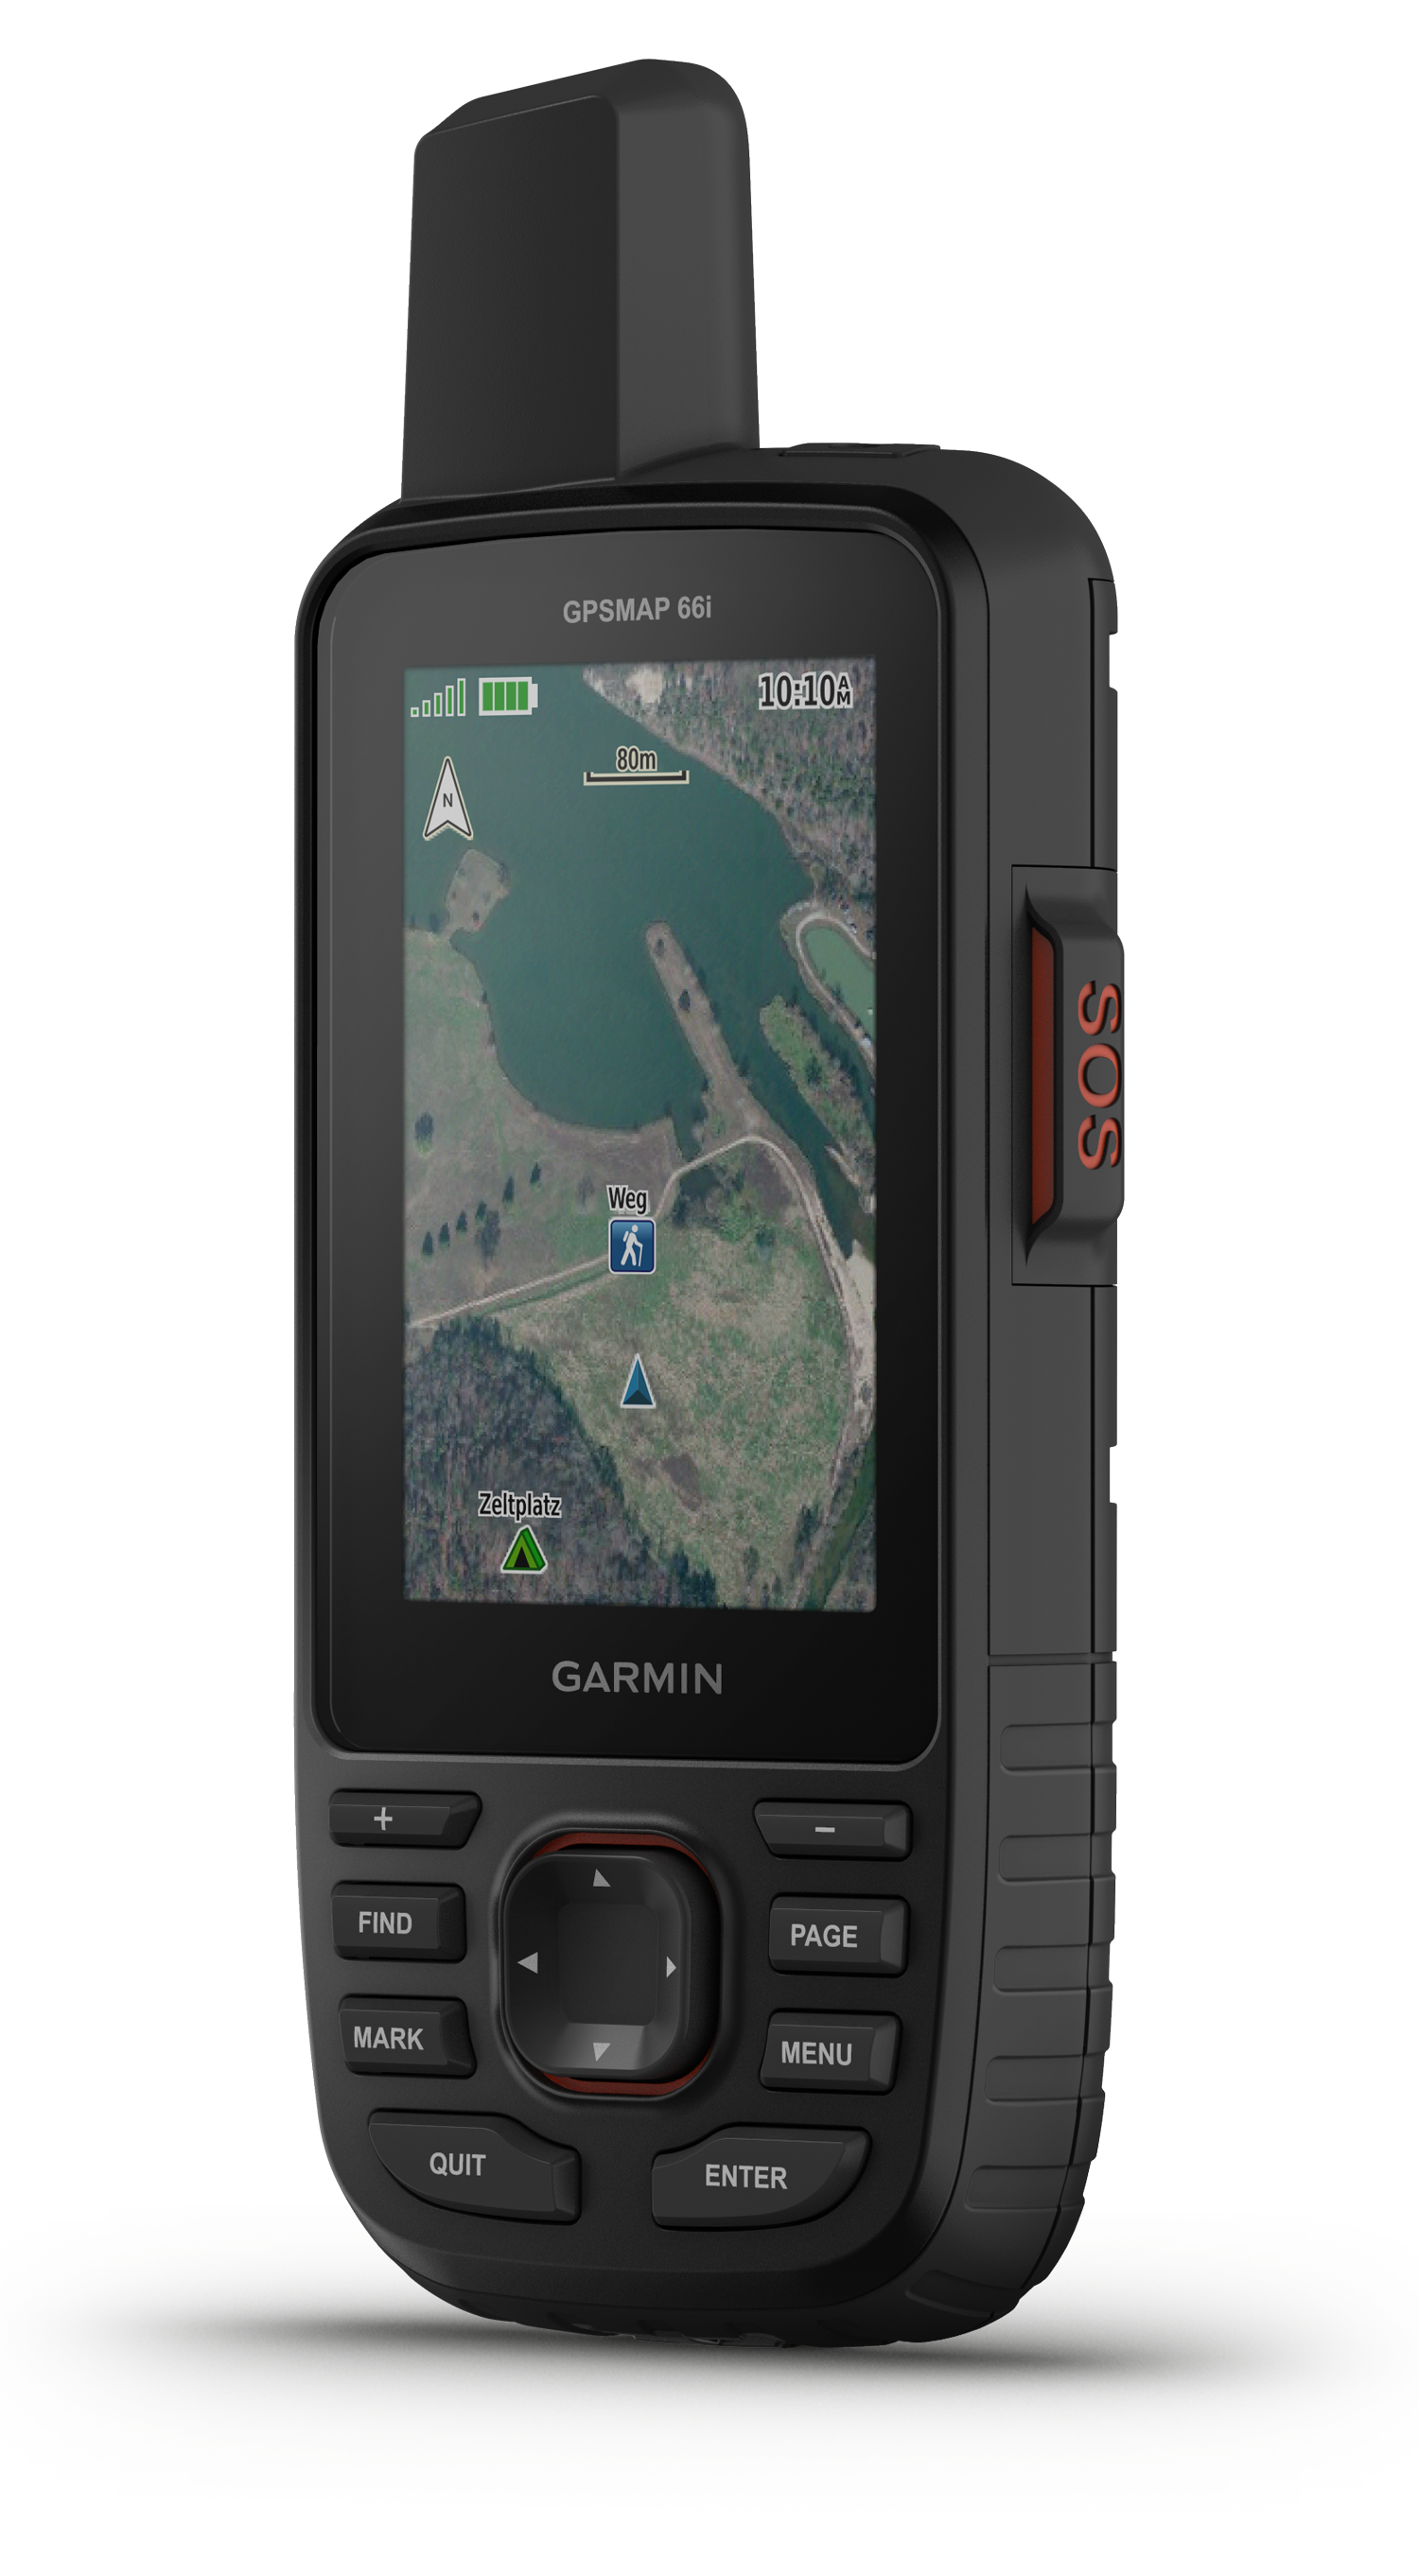 Go global with the GPSMAP 66i Garmin inReach Land Navigation